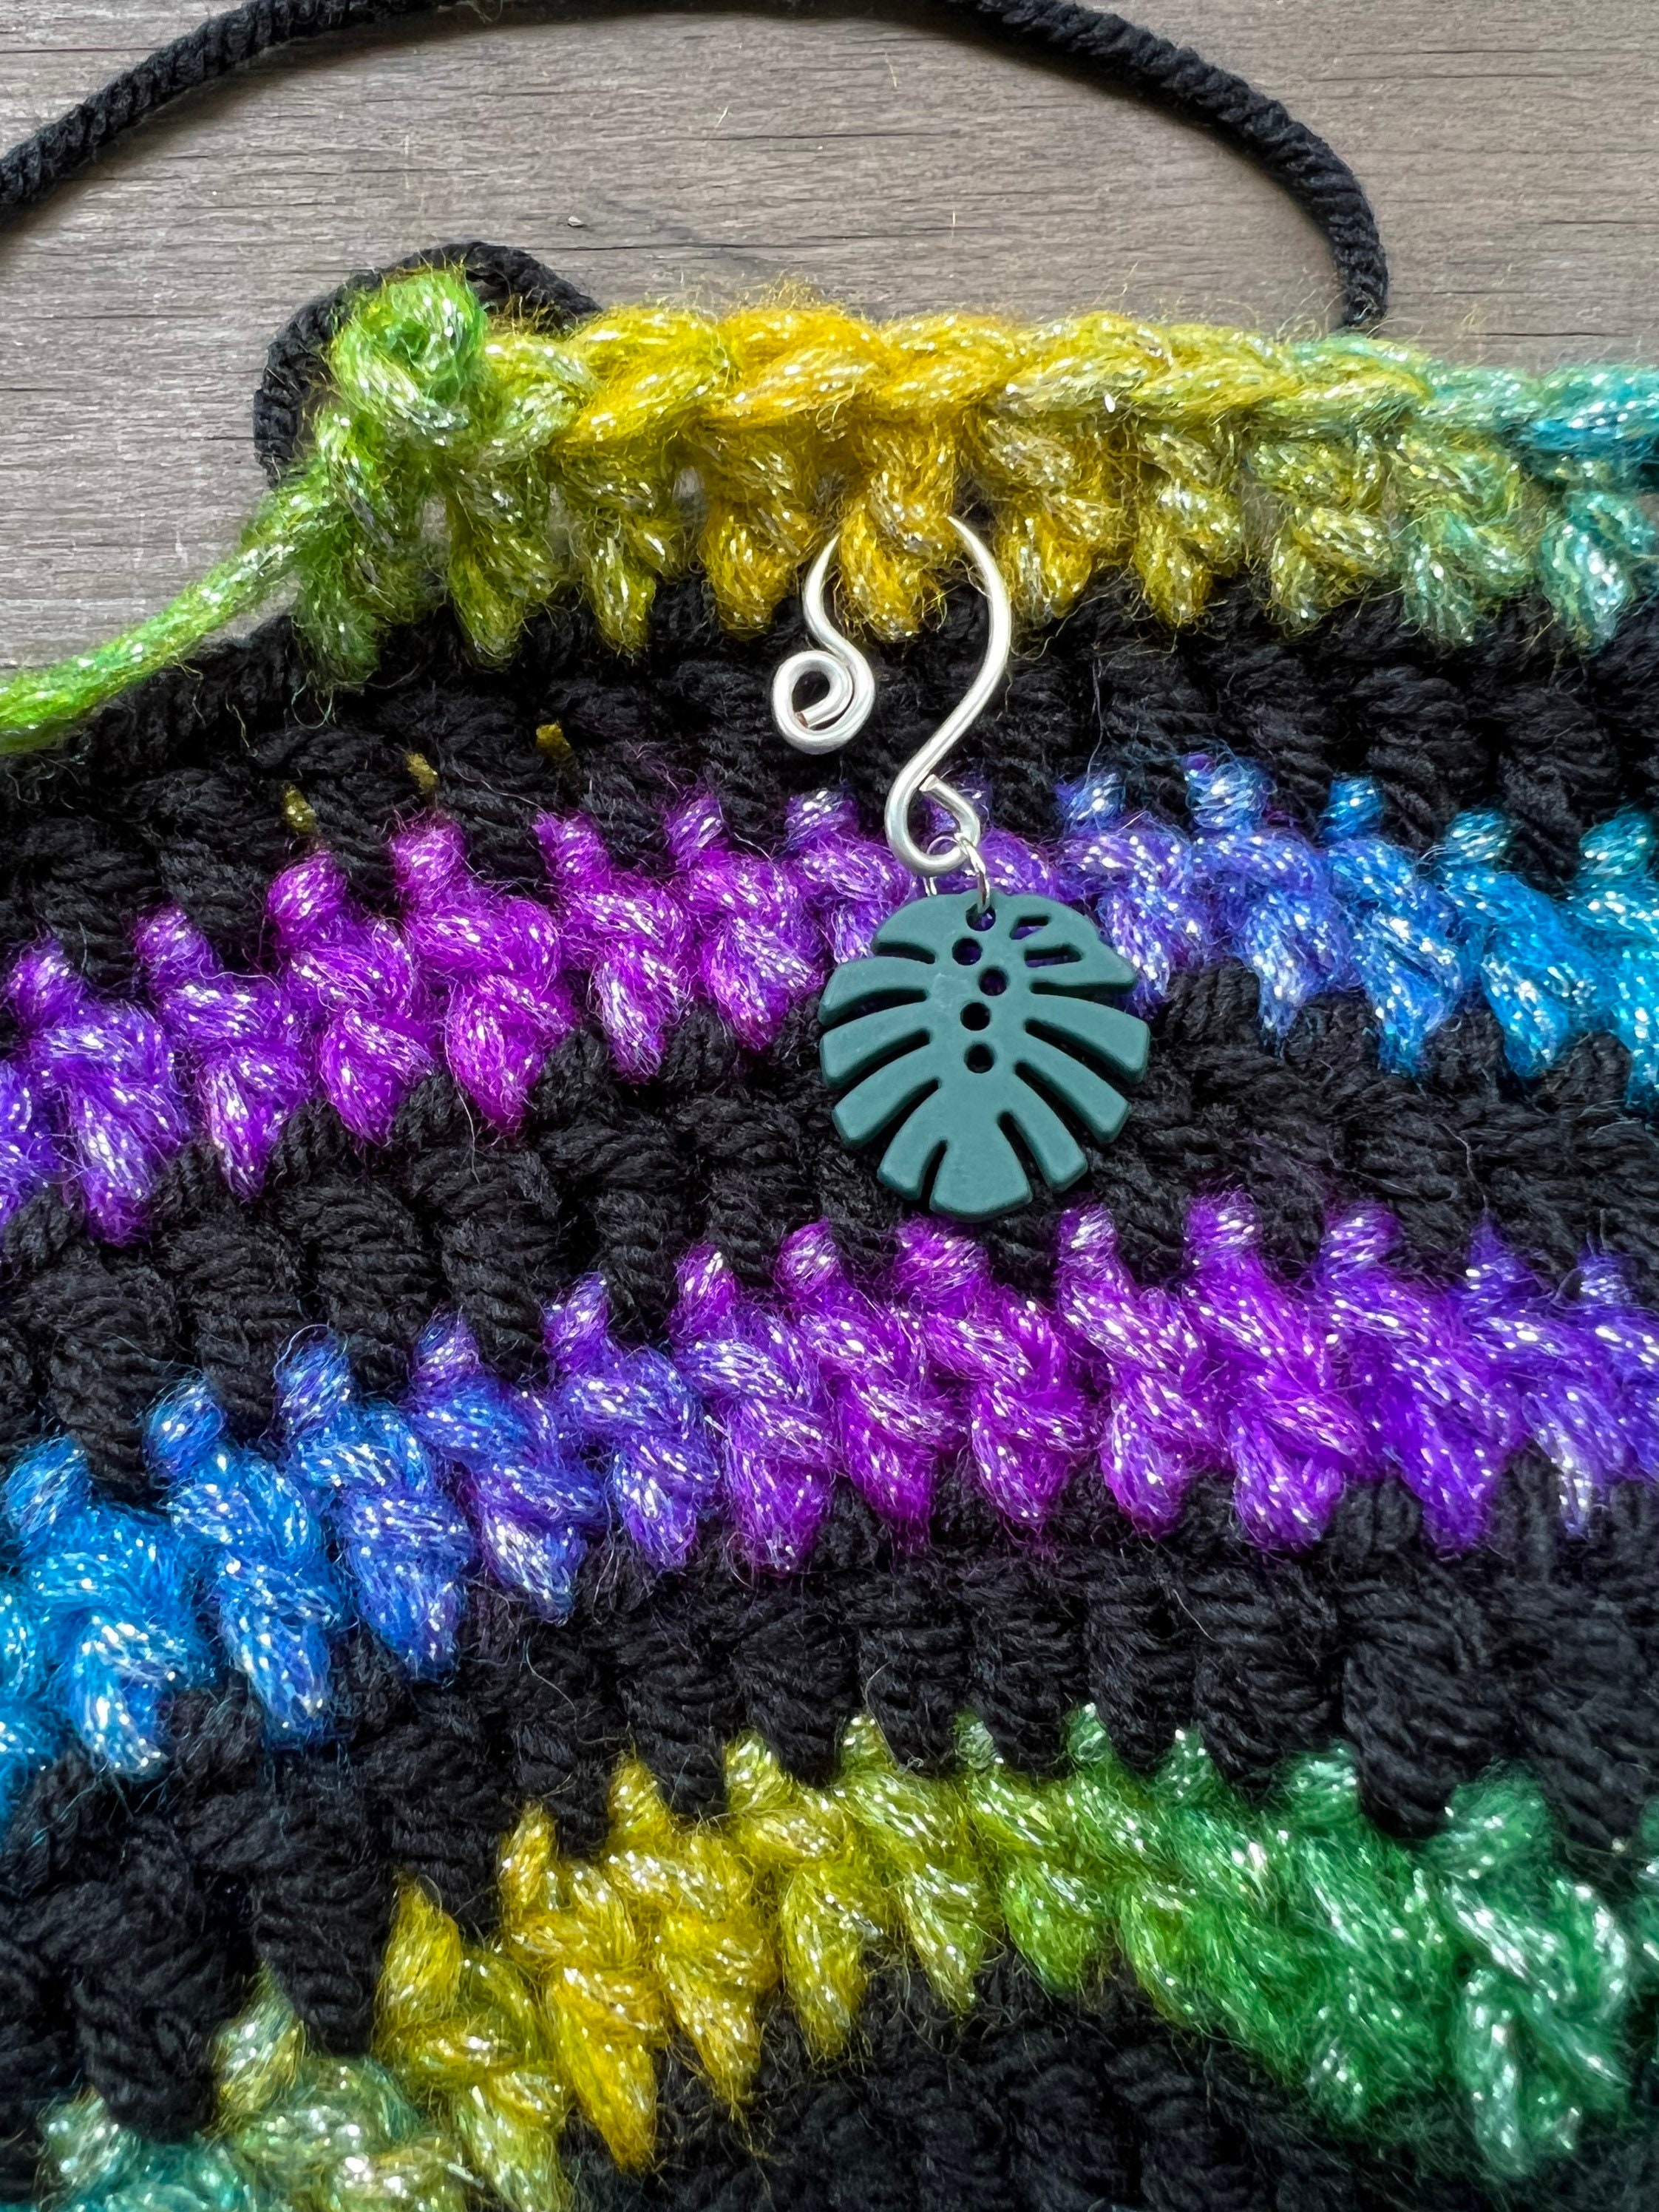 Butterfly Crochet Stitch Markers  Girlfriend Gift – Pretty Warm Designs